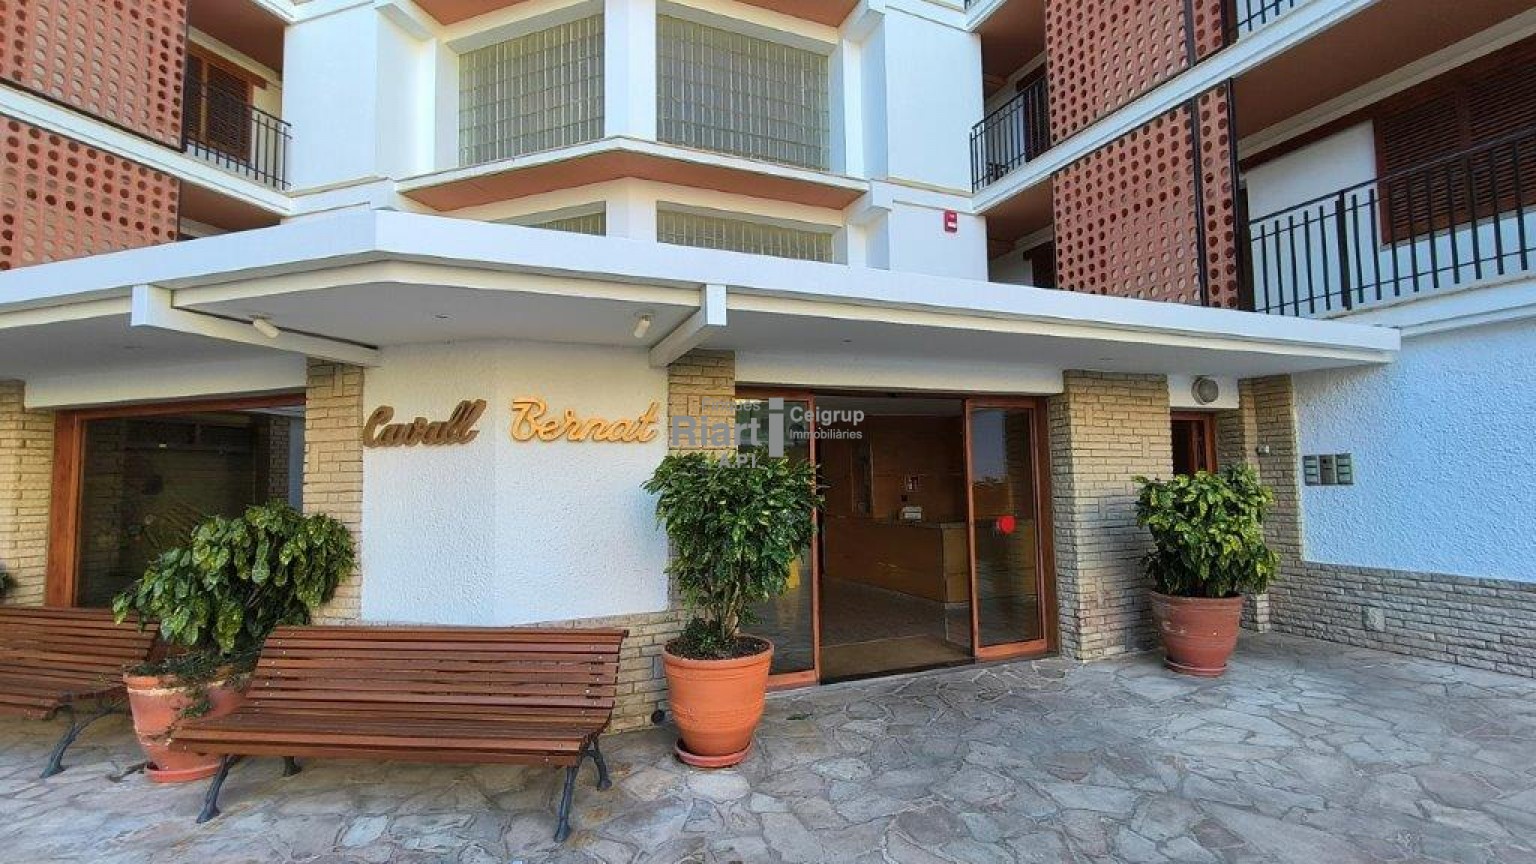 CAVALL BERNAT I-89 (2 rooms)